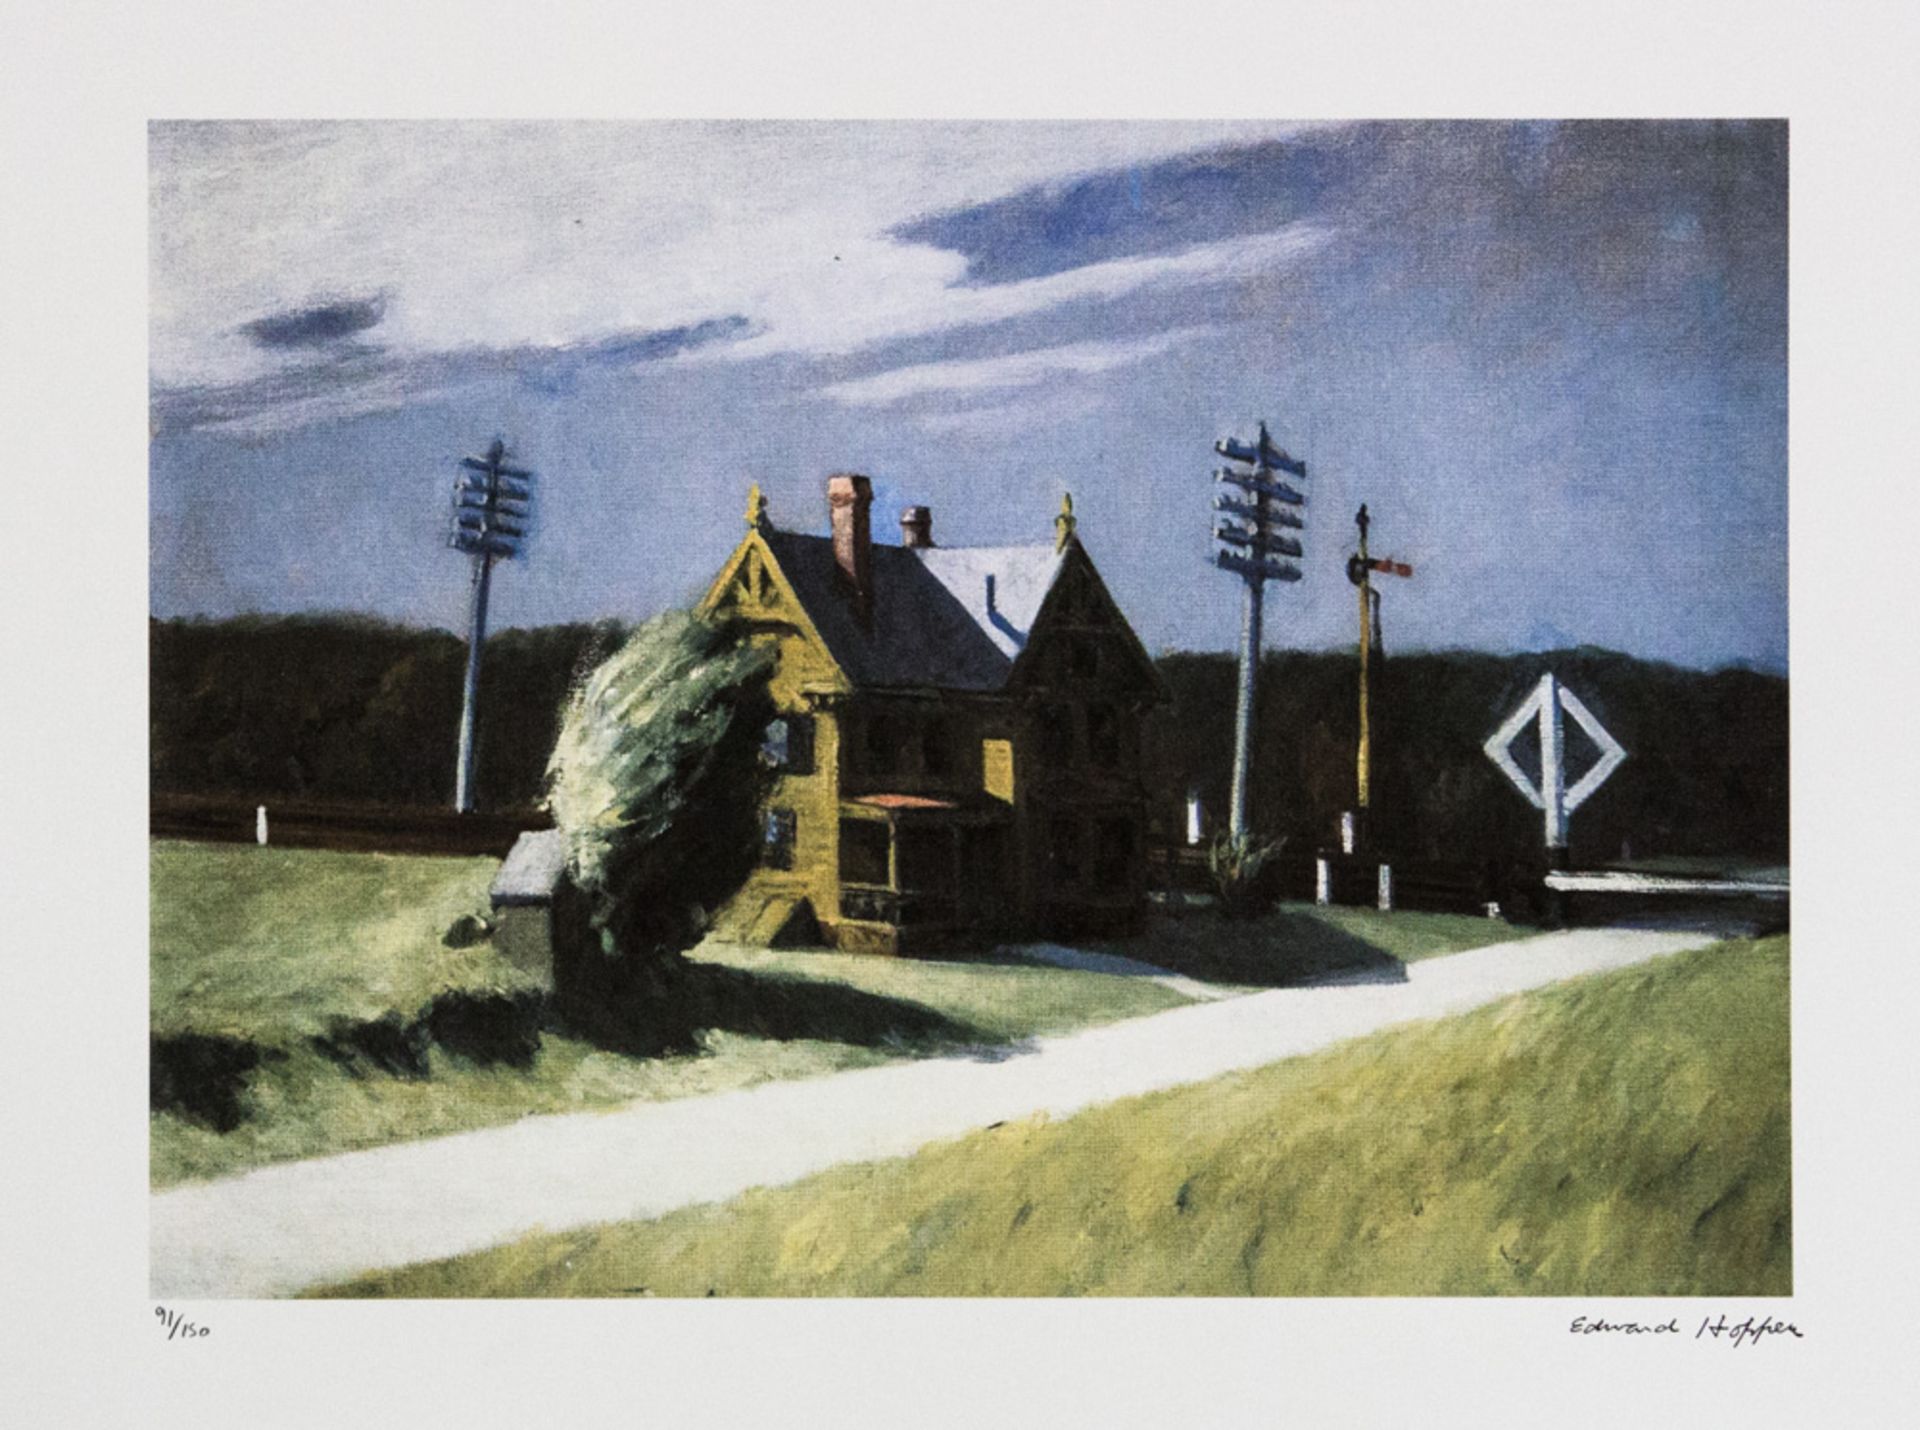 Edward Hopper 'Railroad Crossing'